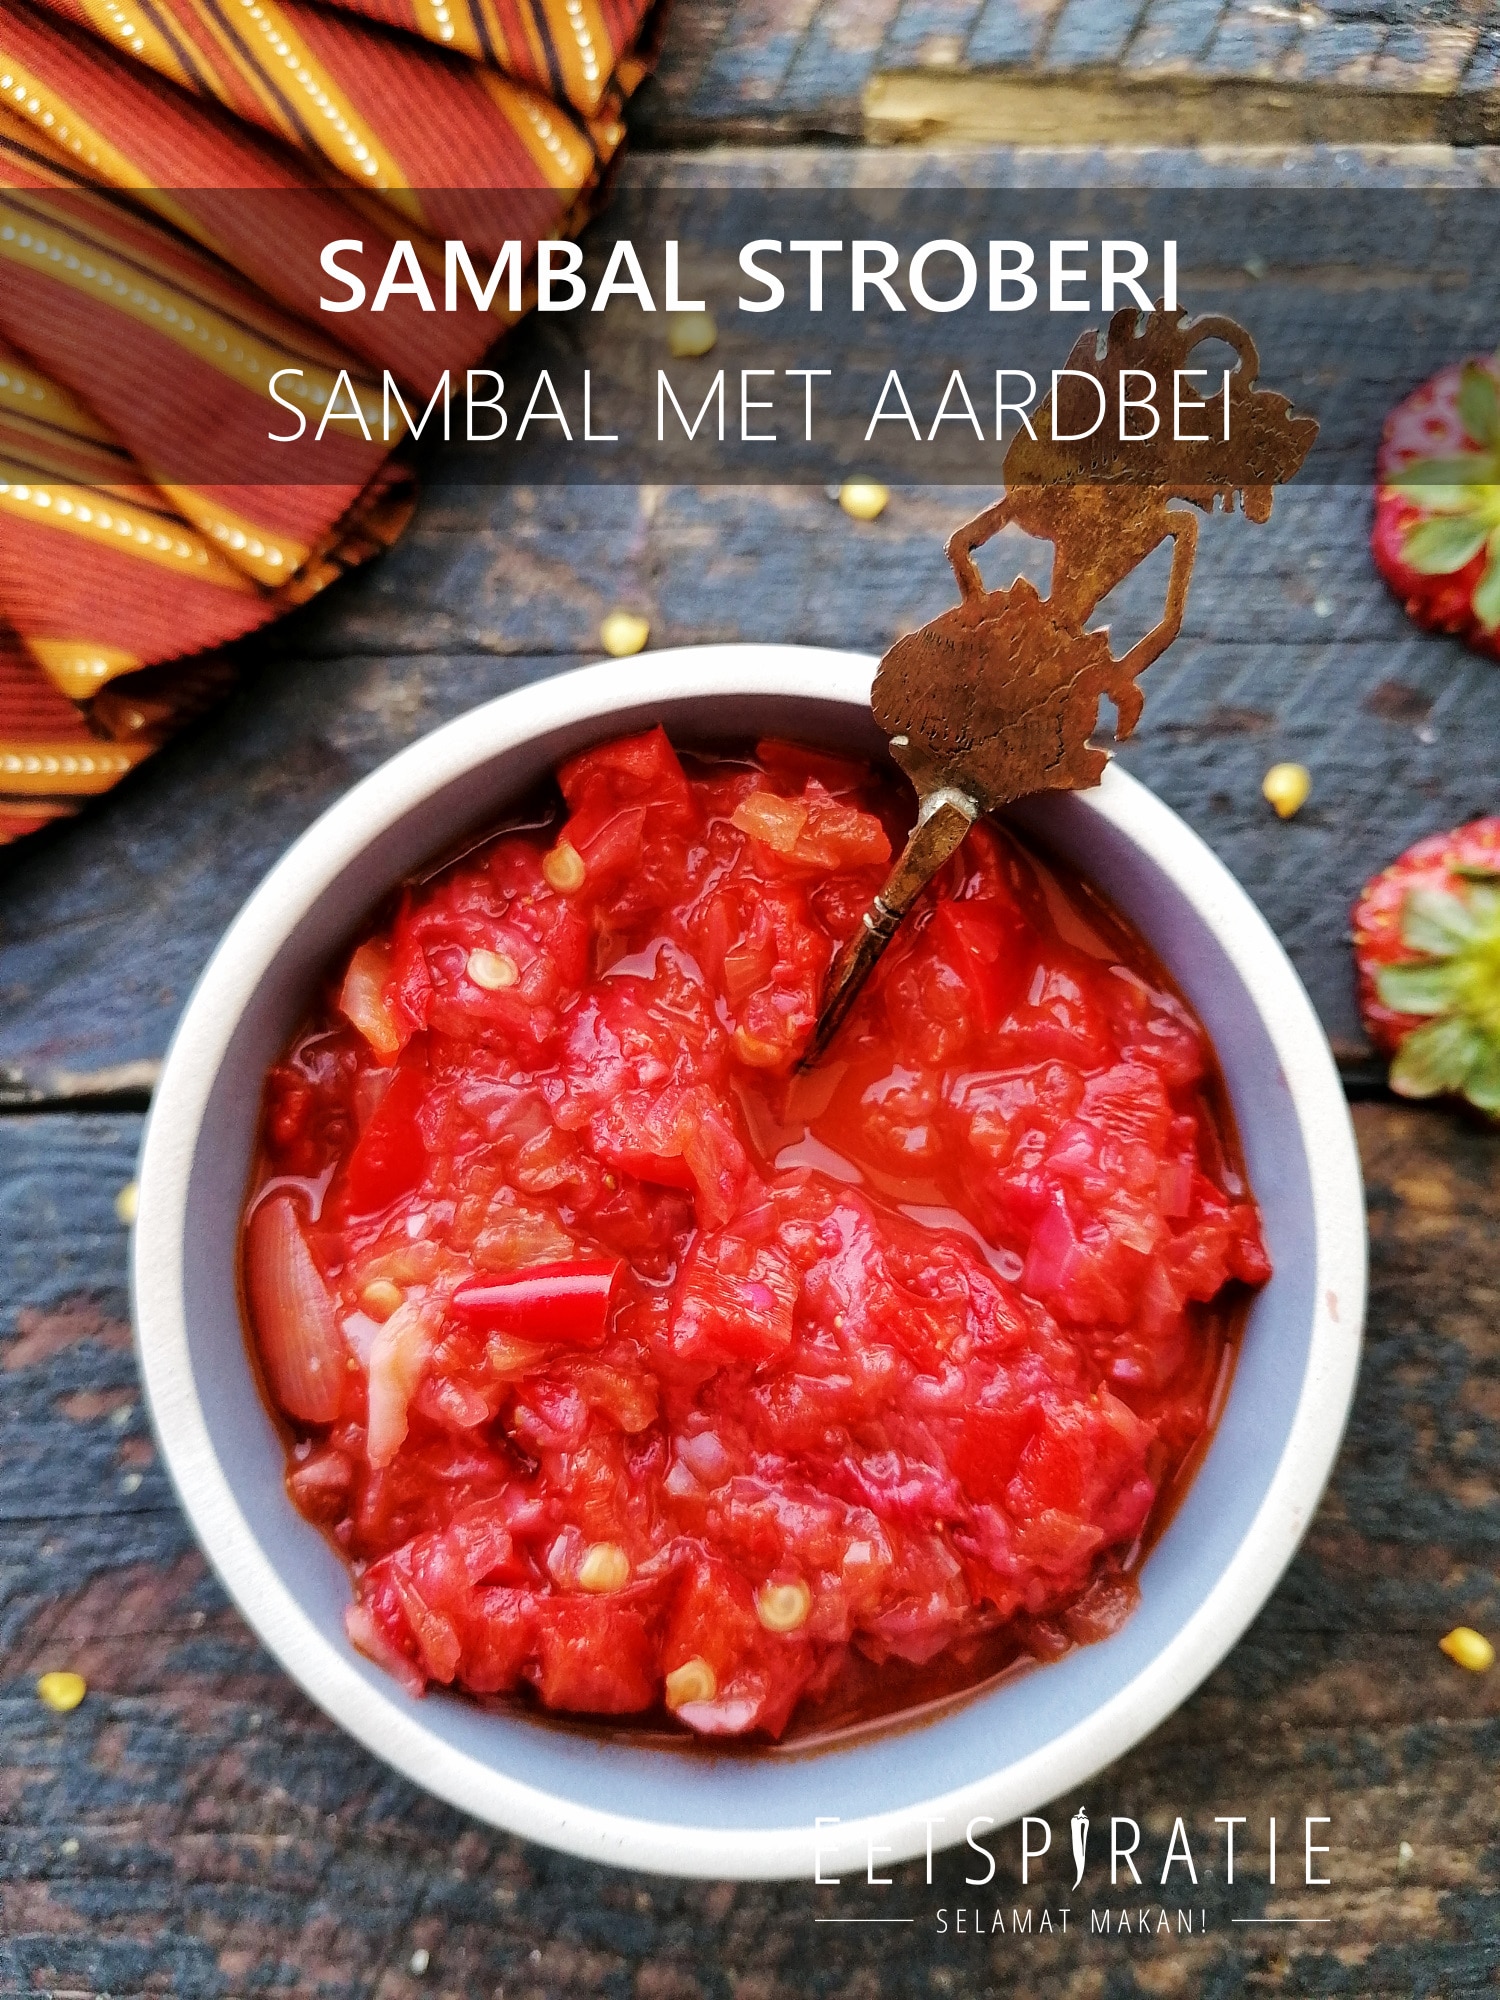 Sambal stroberi (aardbeien sambal)